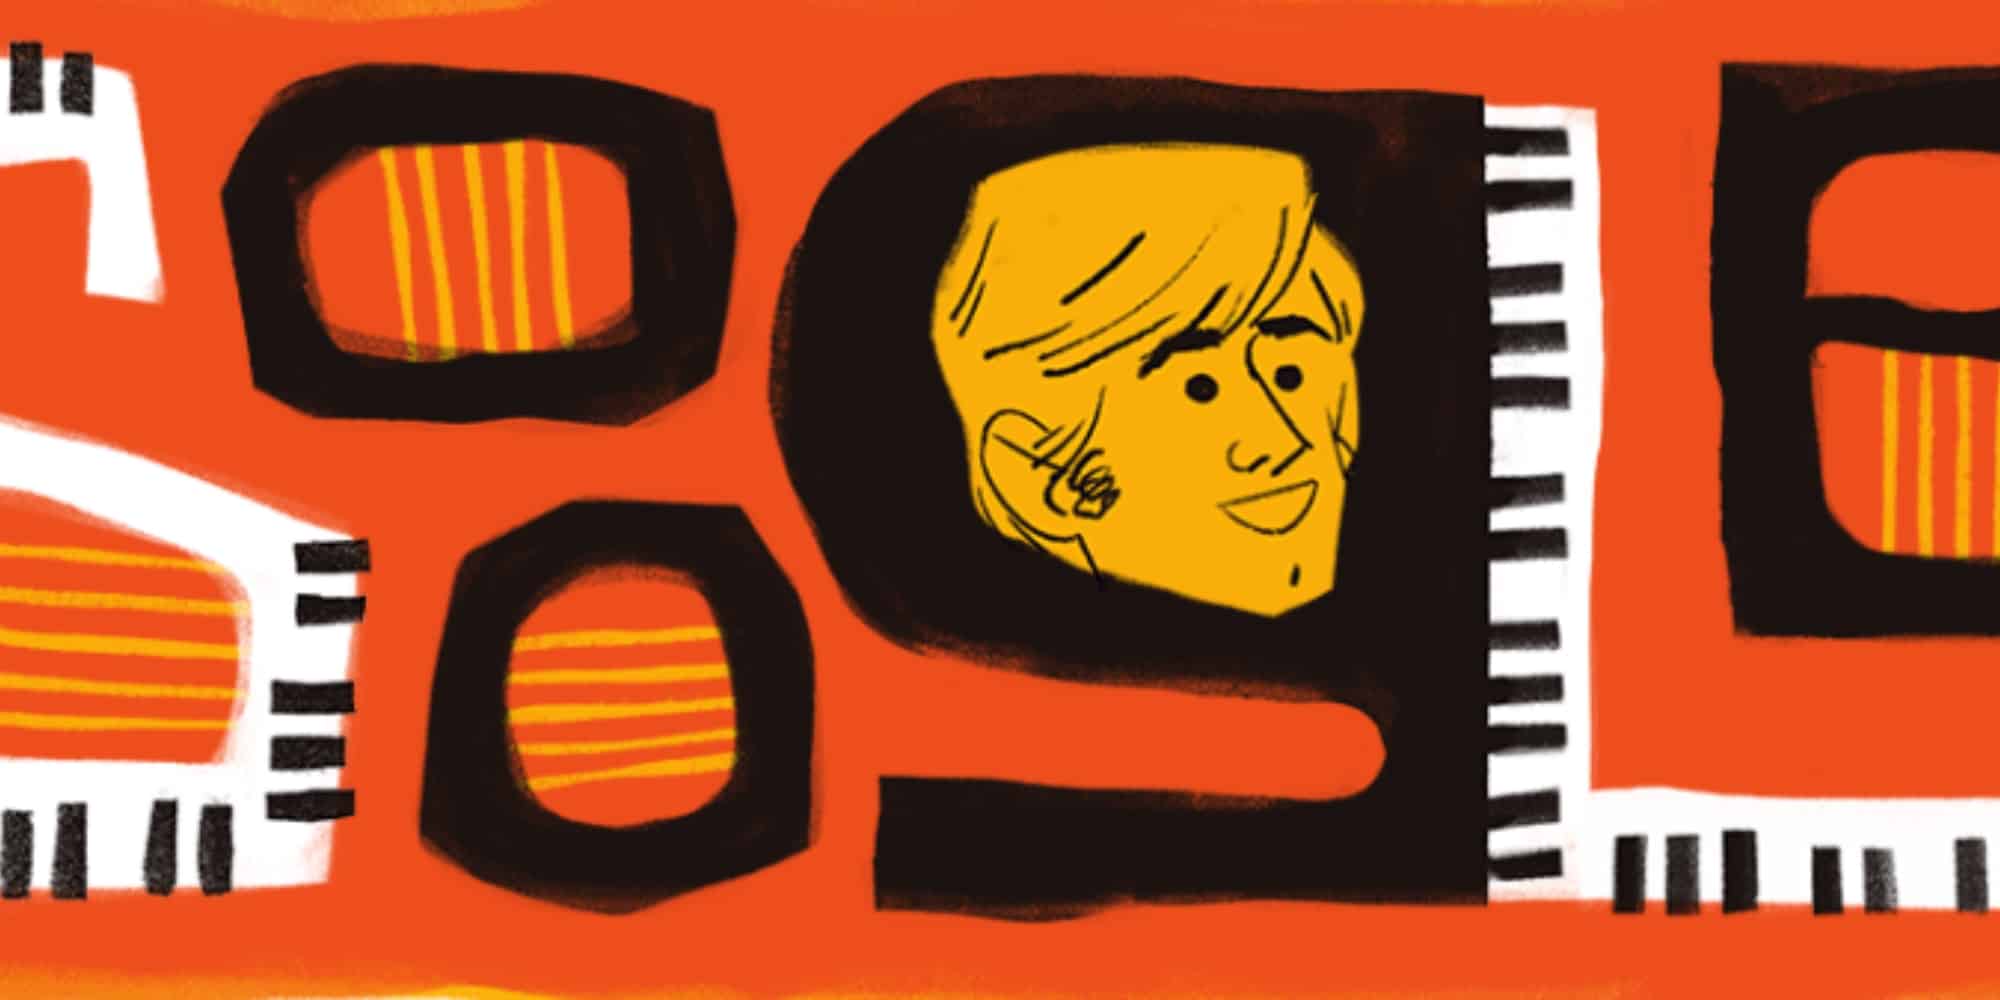 doodle 1 1 - Η Google τιμά με doodle τον Πολωνό συνθέτη και τζαζίστα, Κριστόφ Κομέντα - Ποιος ήταν (εικόνα & βίντεο)